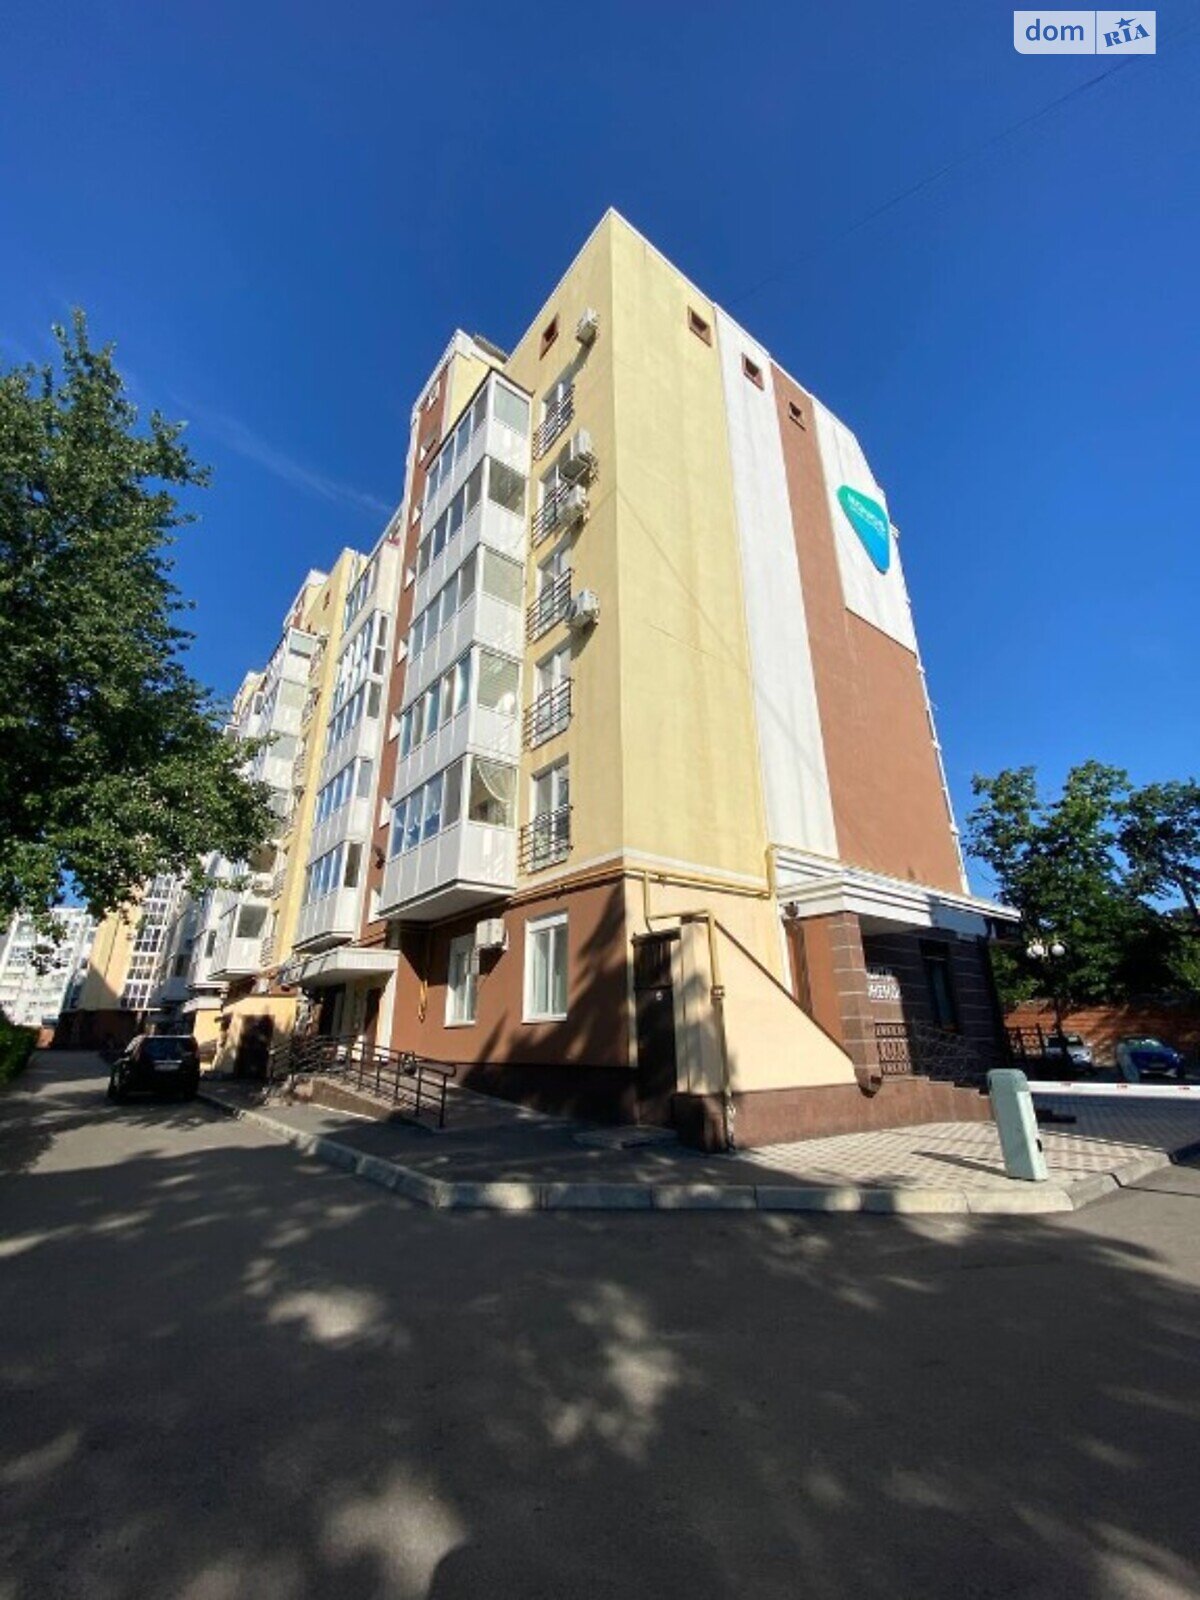 однокомнатная квартира в Полтаве, район Центр, на ул. Ляхова 10 в аренду на короткий срок посуточно фото 1